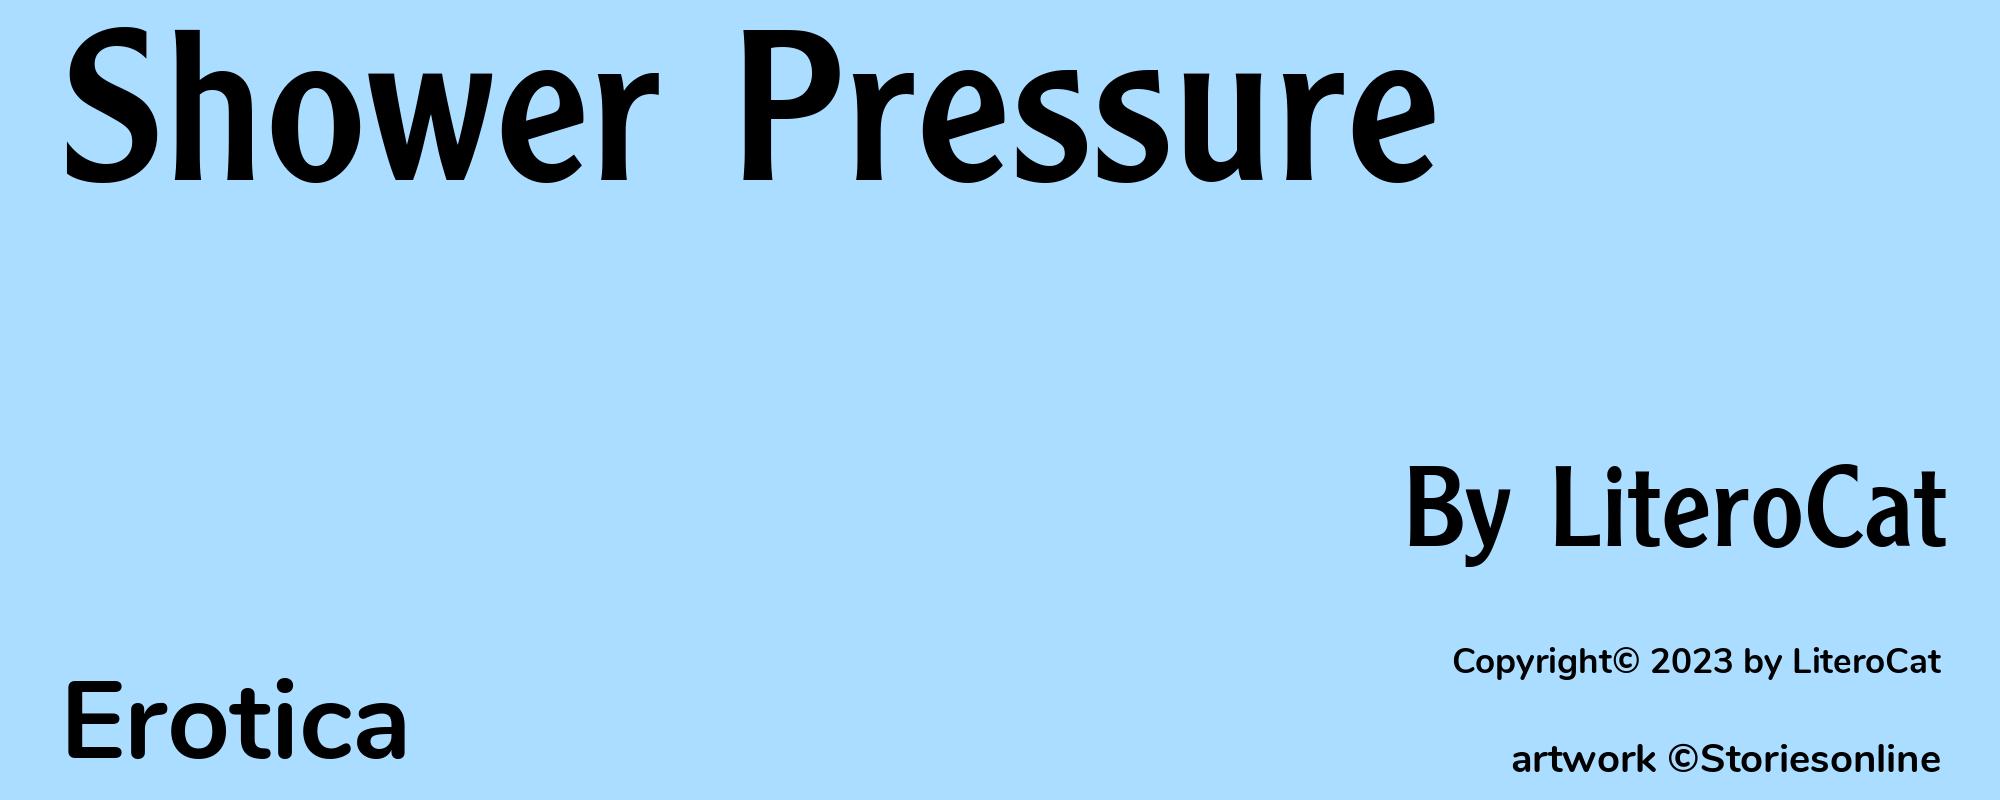 Shower Pressure - Cover